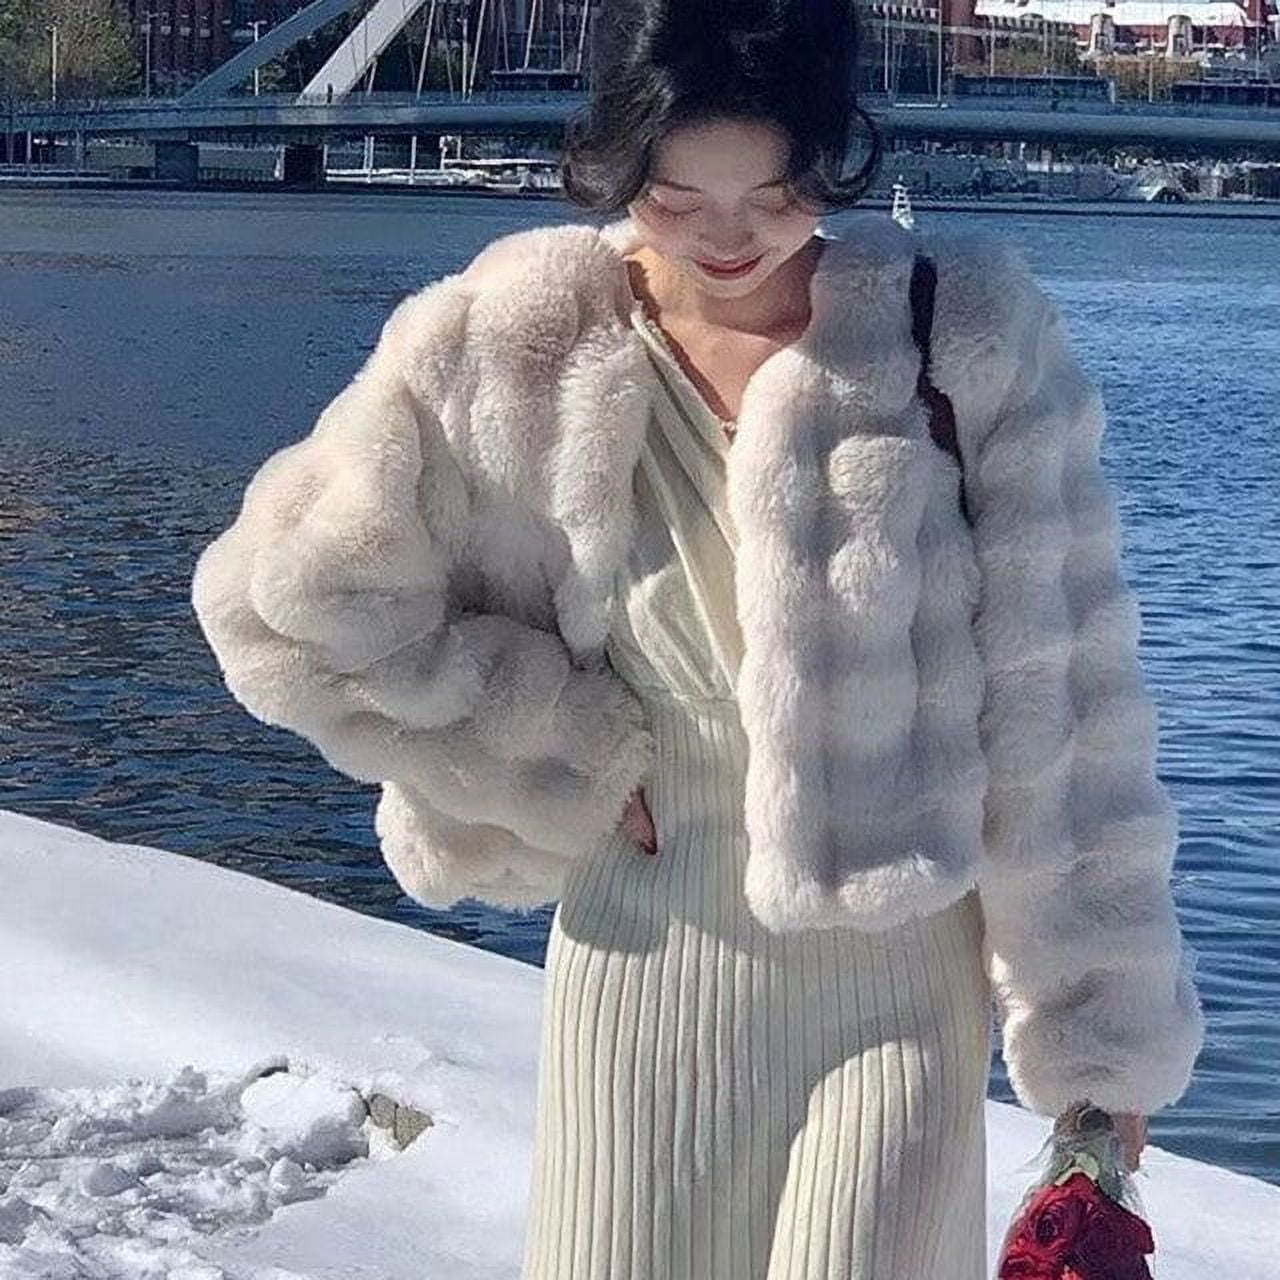 Women Winter Xmas Red Faux Rabbit Fur V-neck Korean Mid Long Coats Jacket  Parka